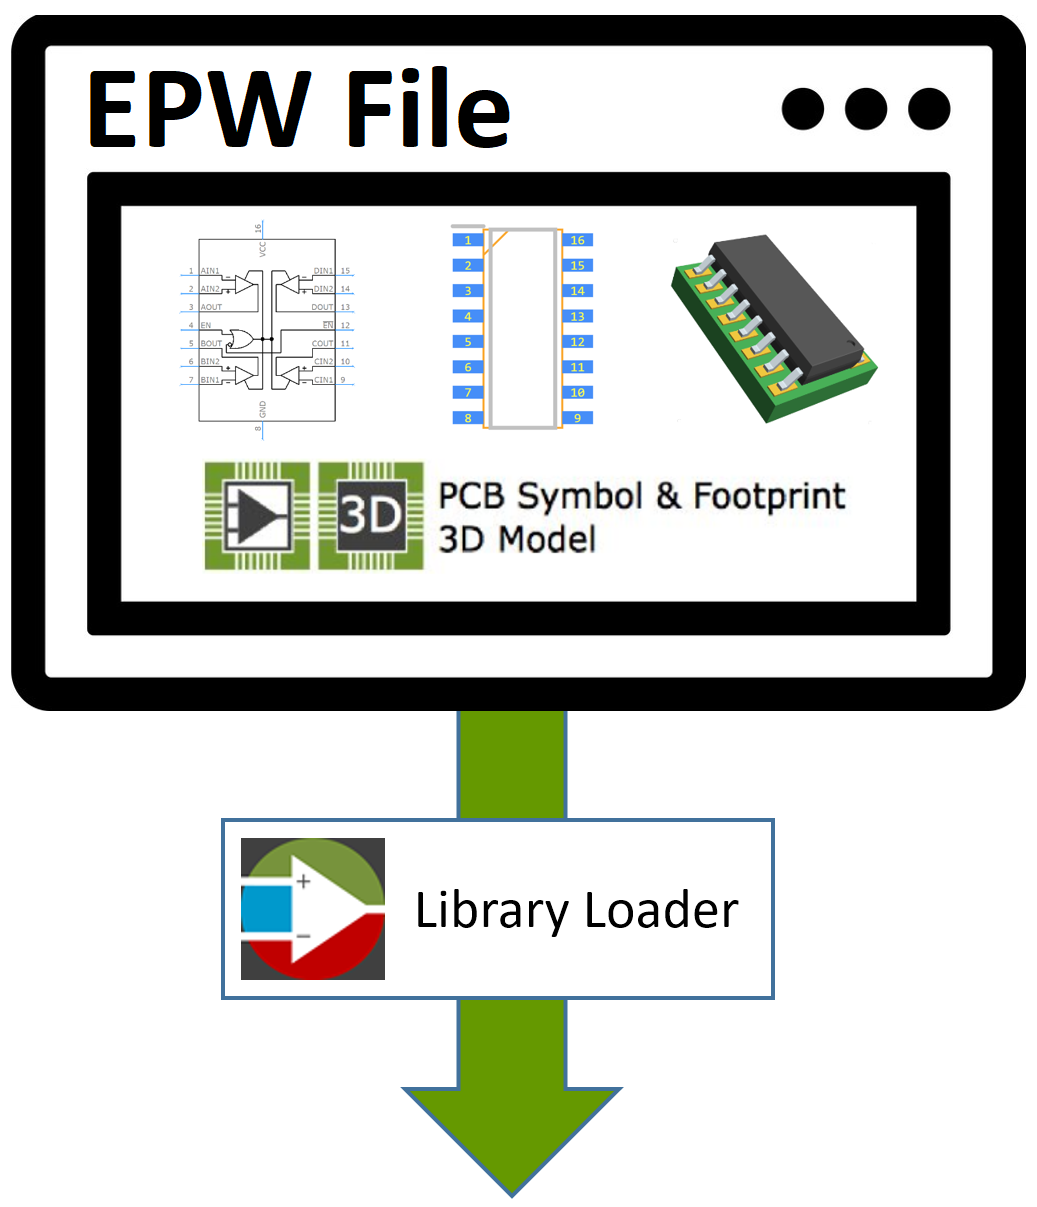 EPW File